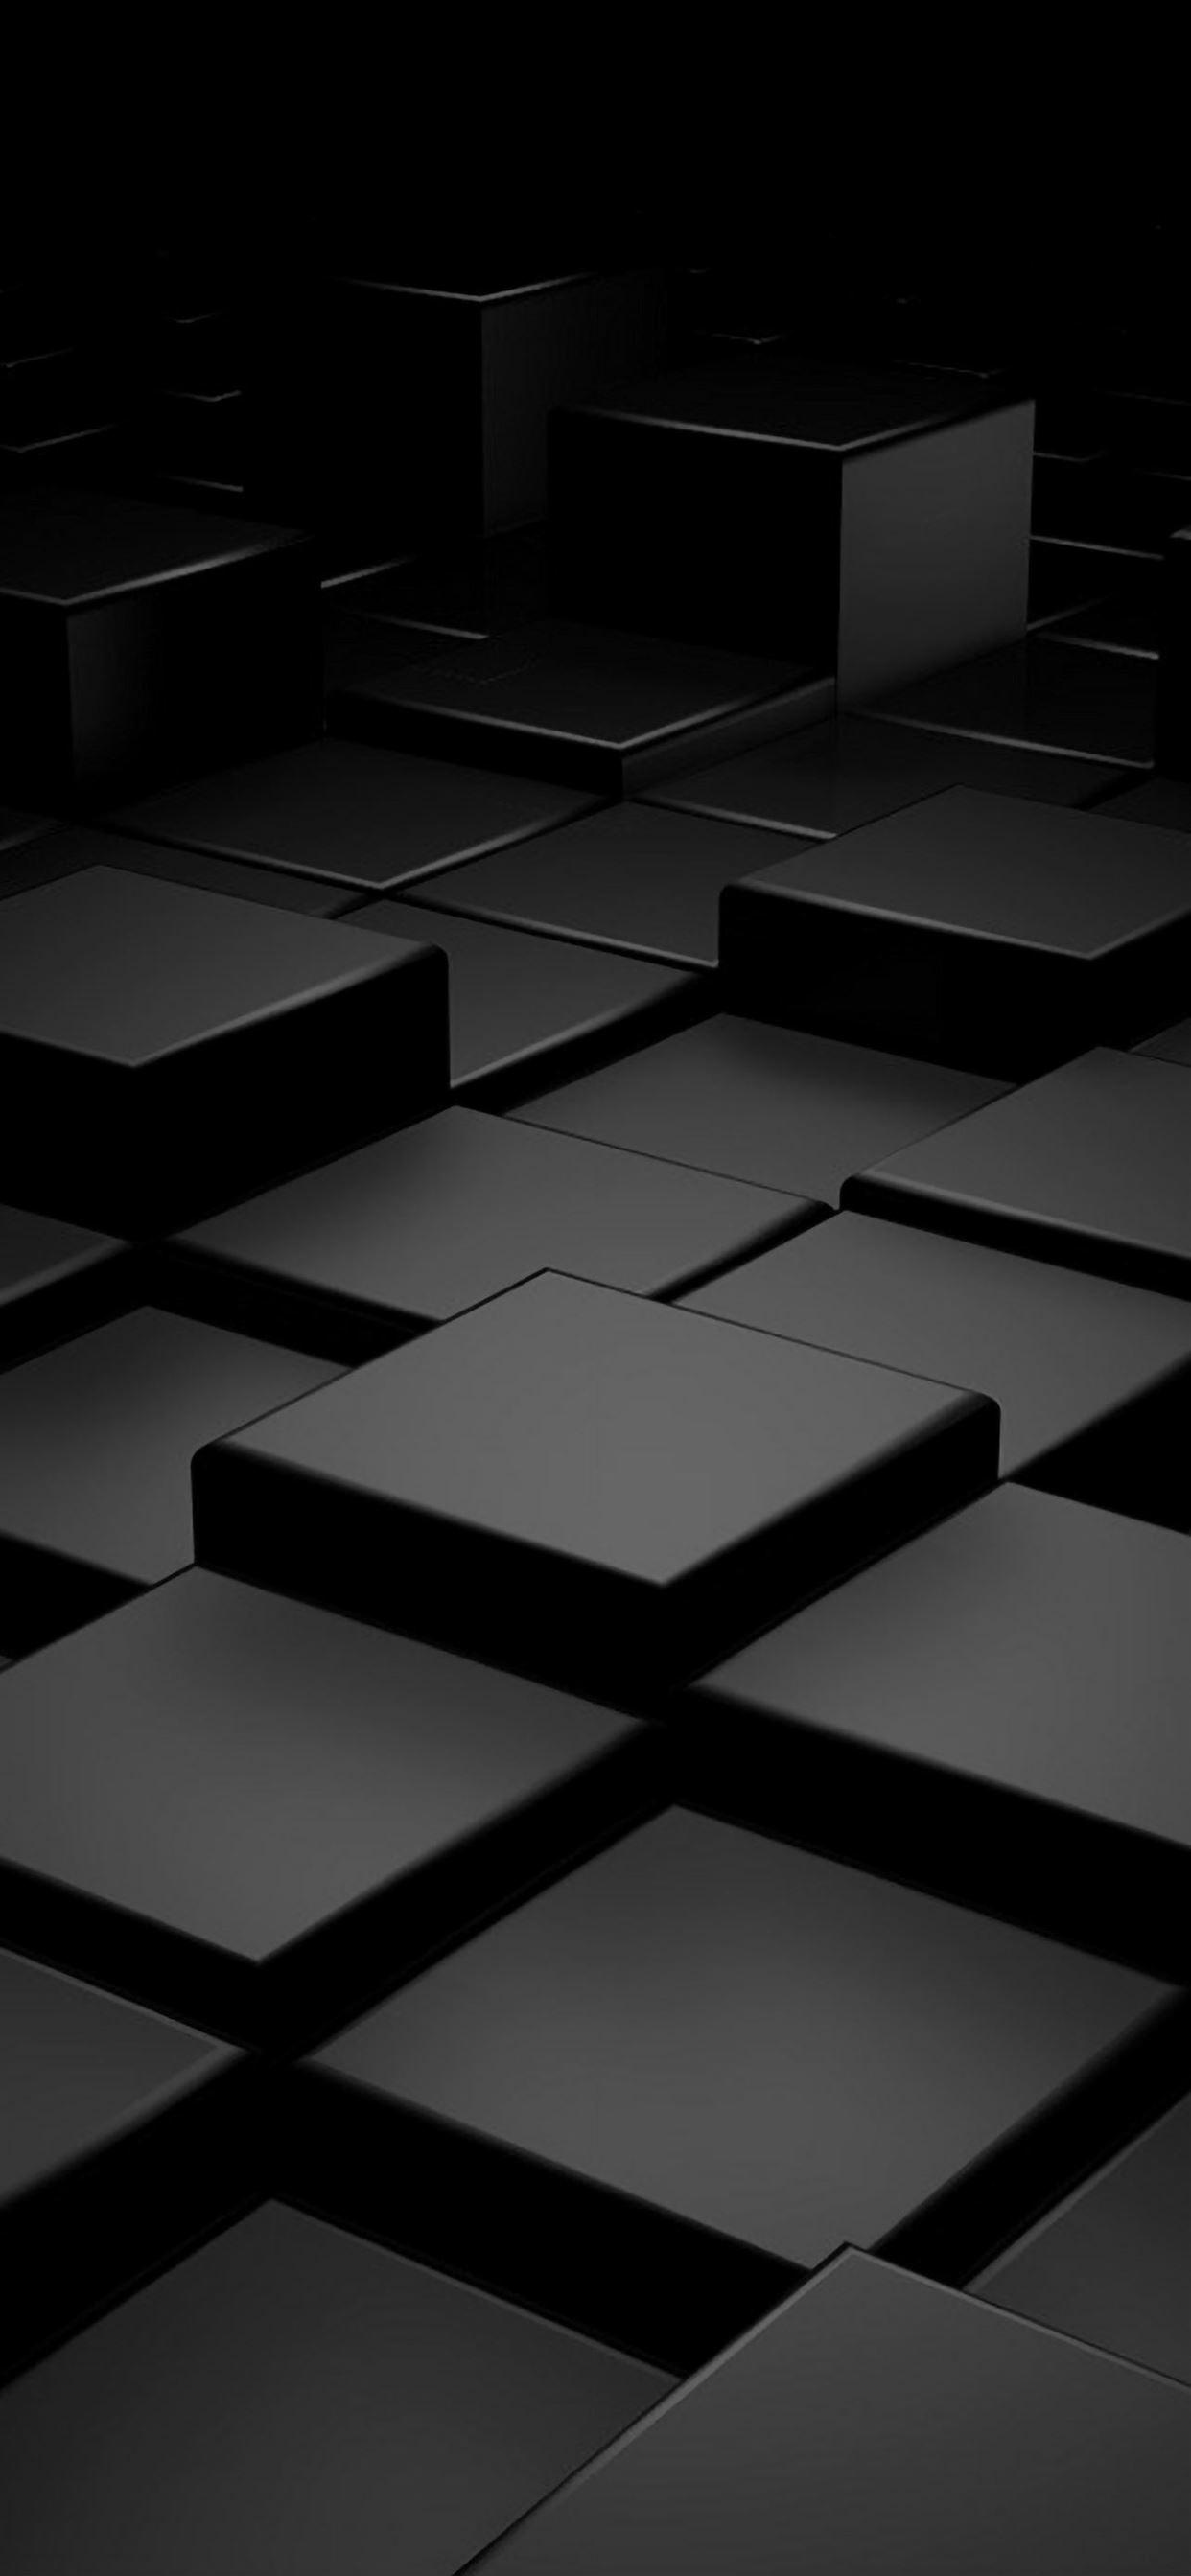 Black 3D Blocks iPhone Wallpapers Free Download